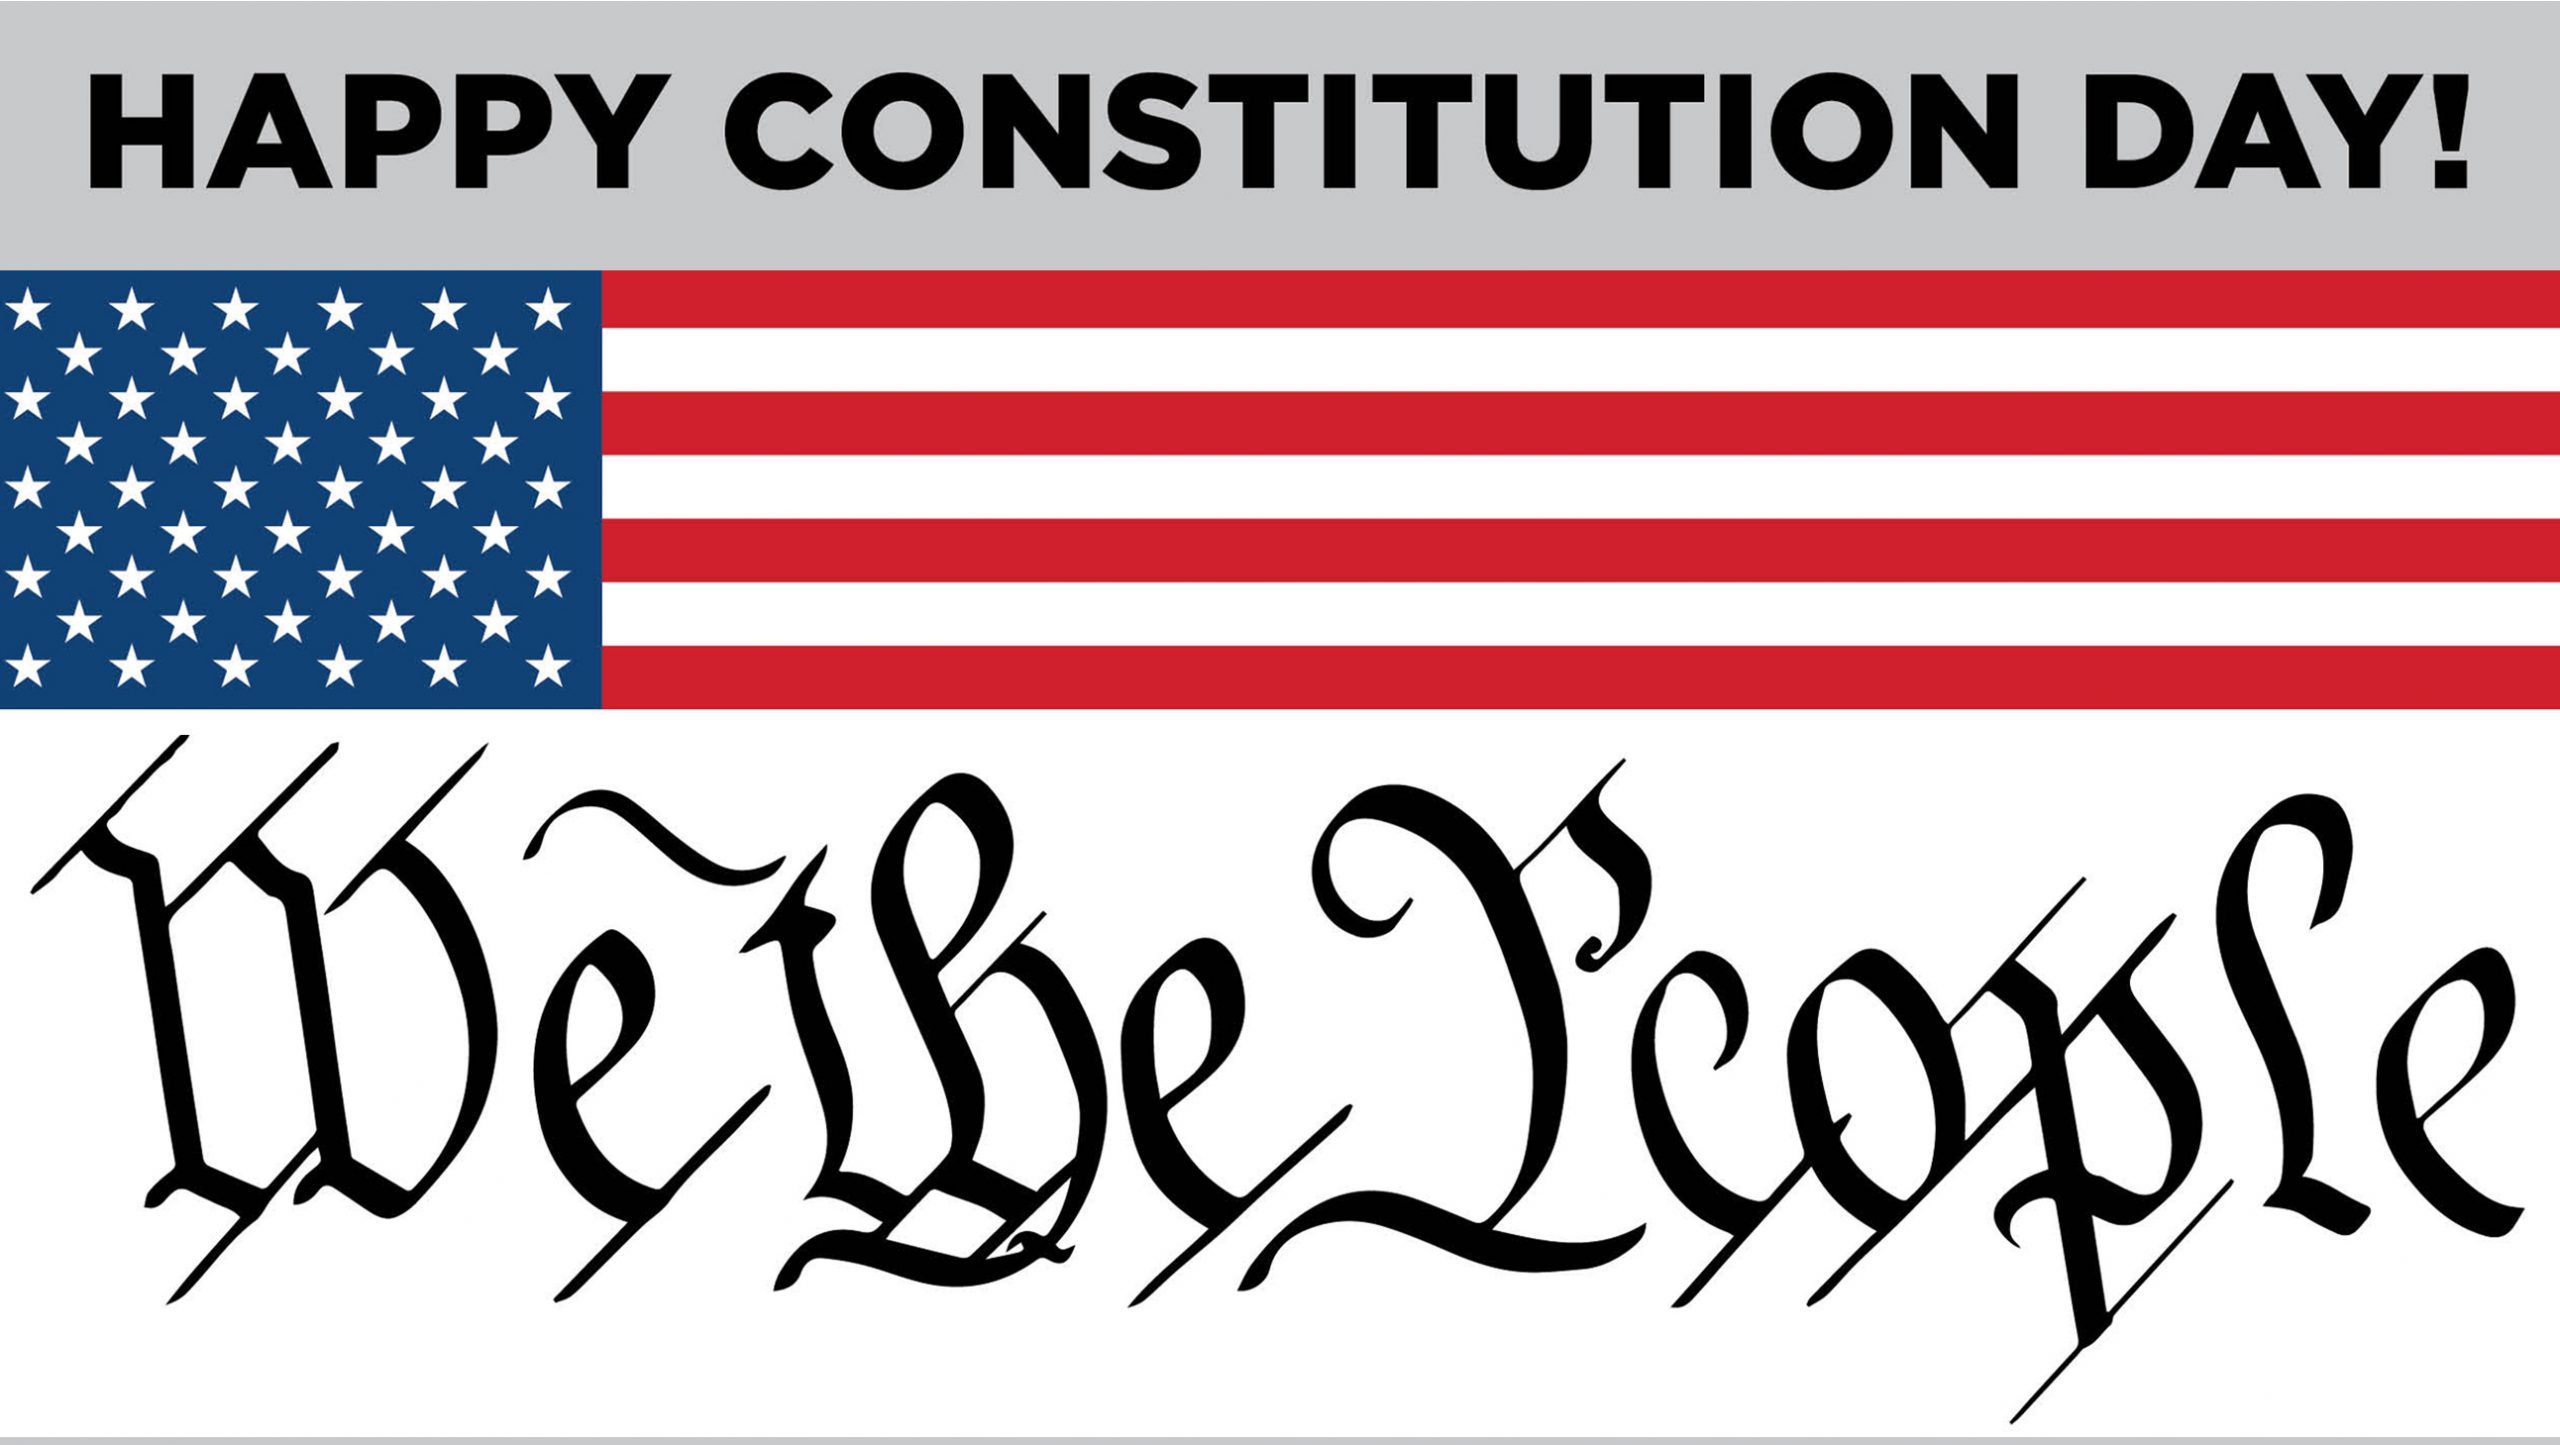 Happy Constitution Day 2020! Mason Votes